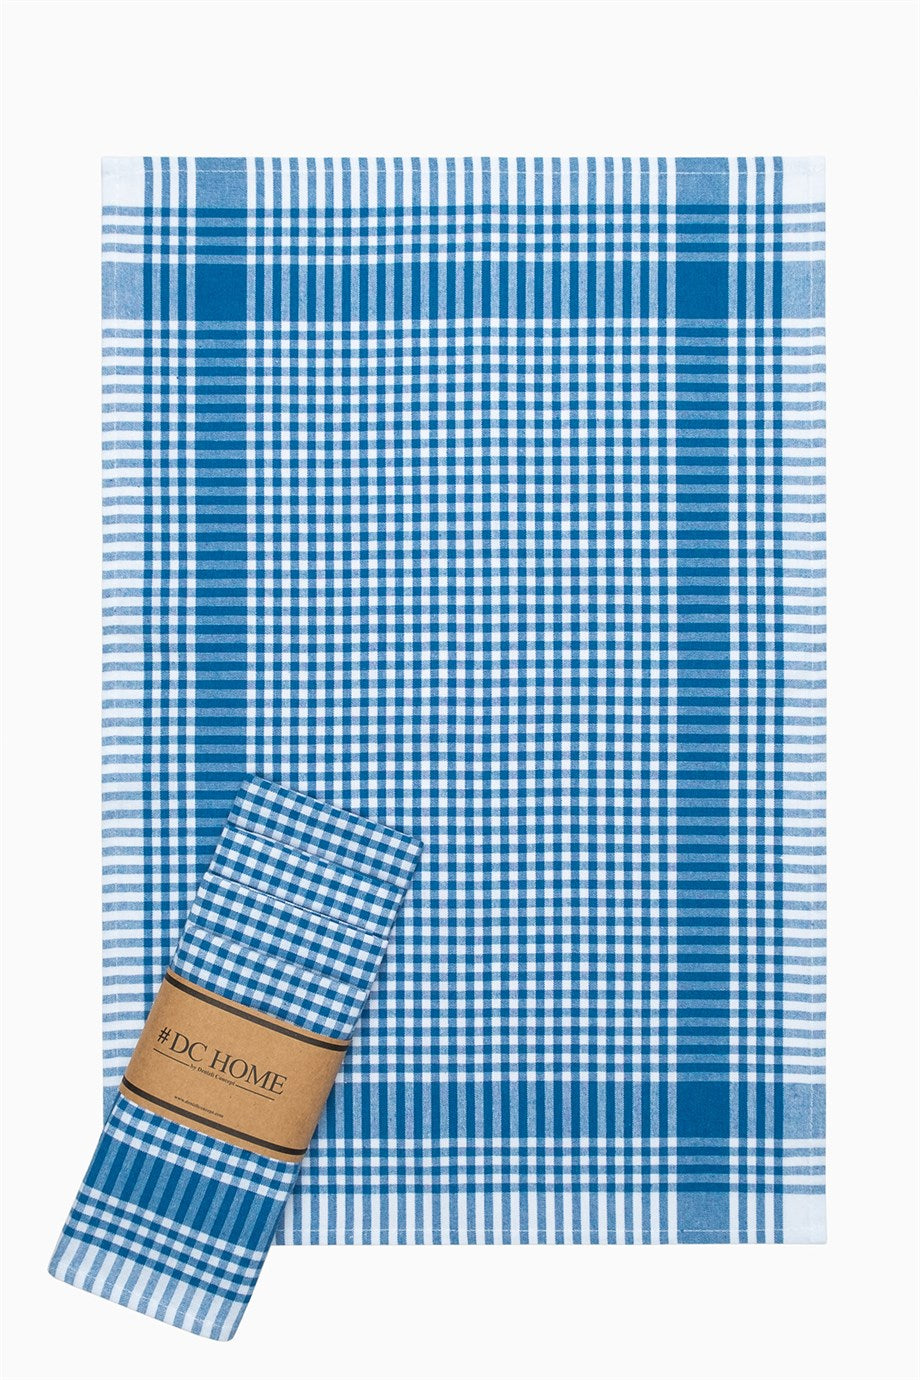 DENIZLI CONCEPT Pöti Checkered Tea Towel Blue